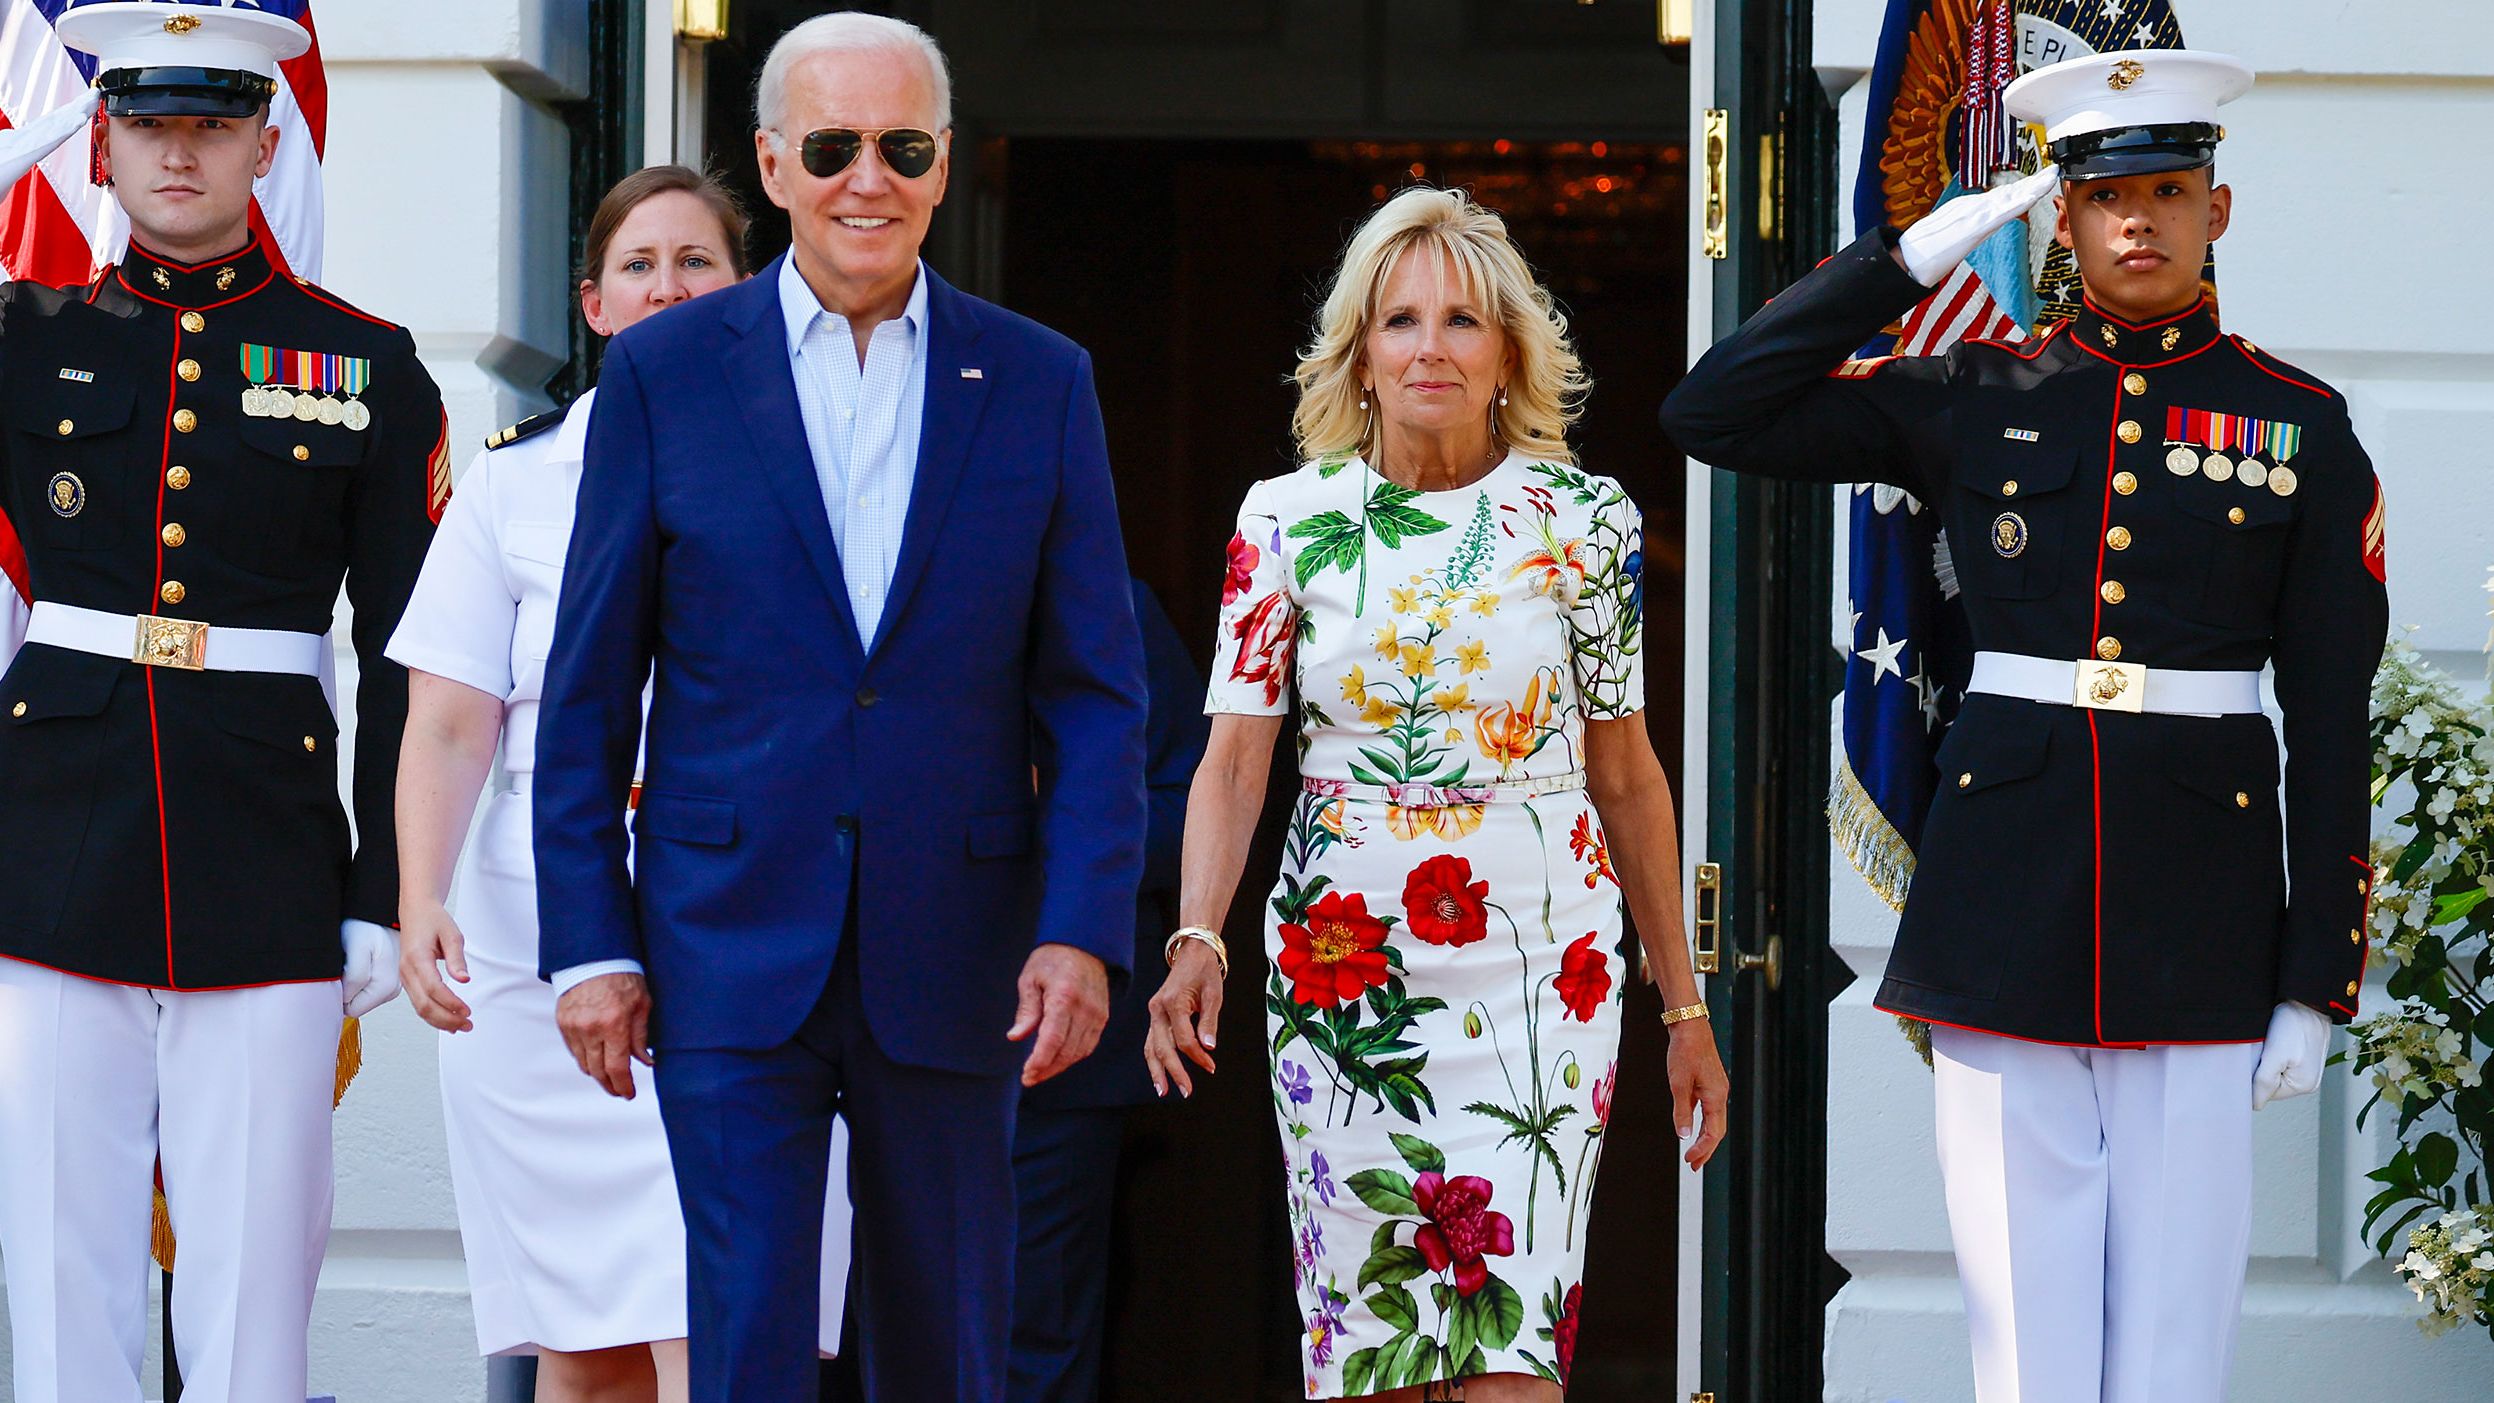 President Joe Biden and first lady Jill Biden walk out of the White House on July 4, 2022 in Washington.